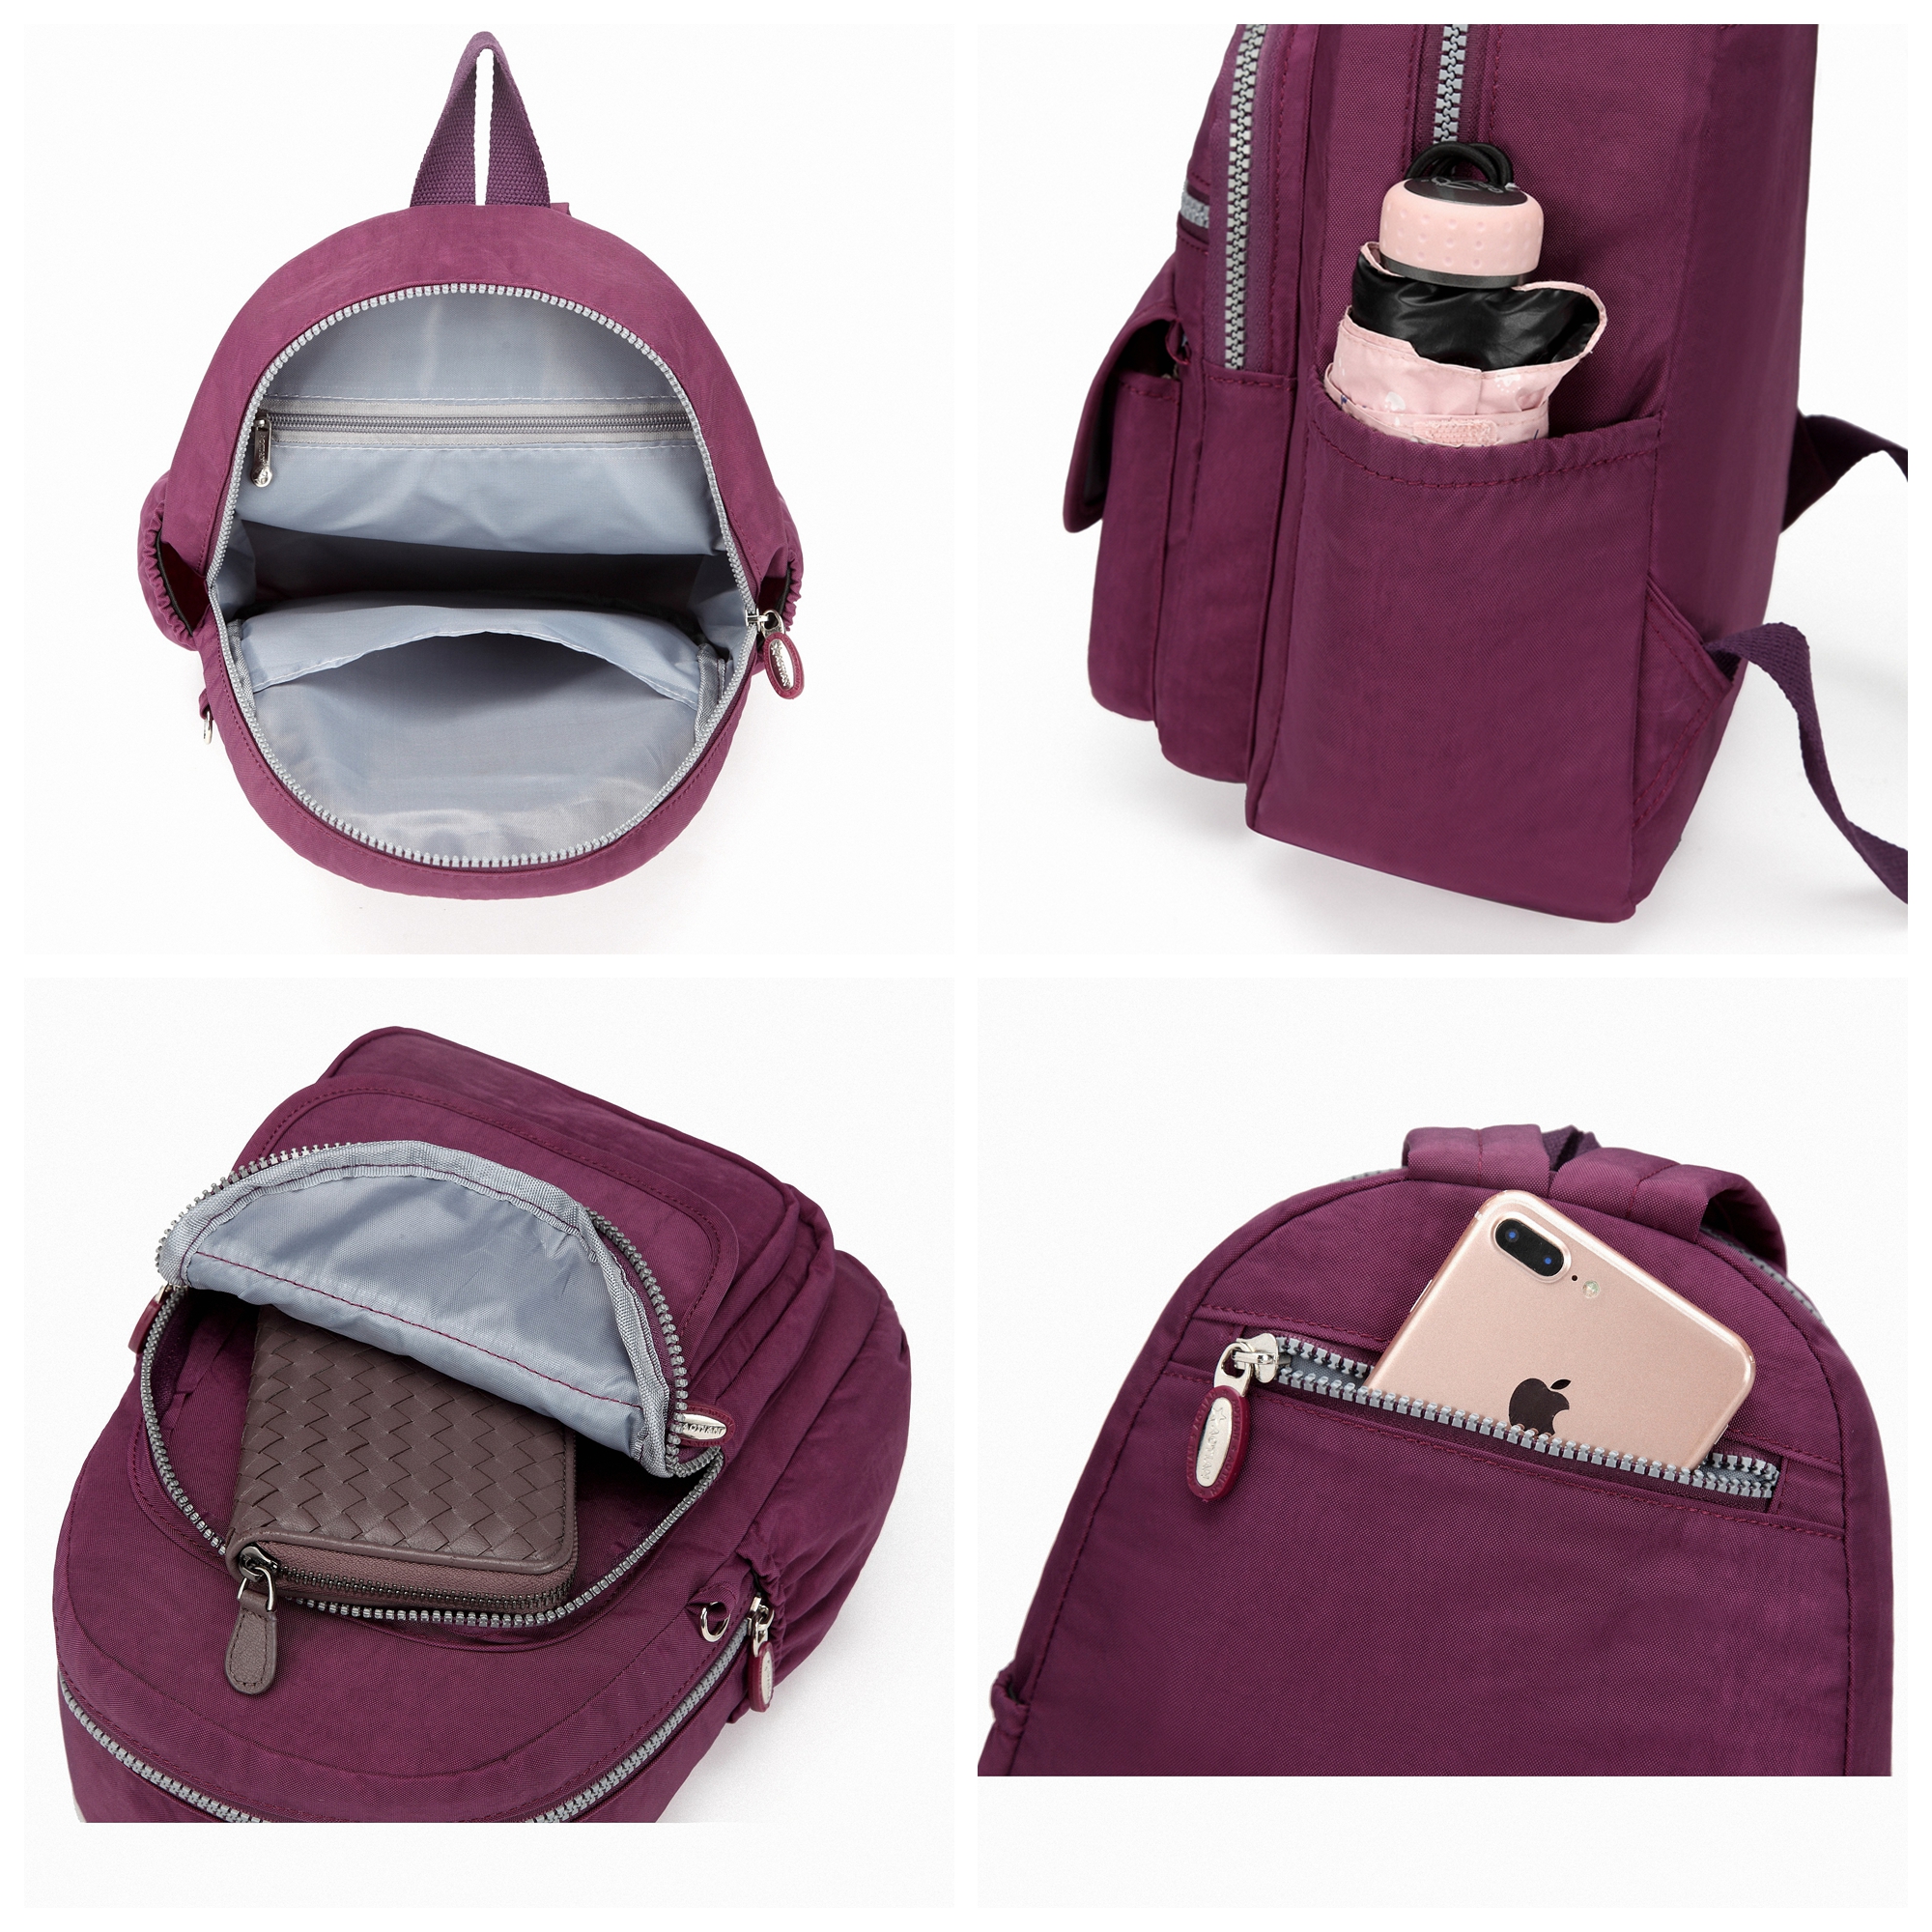 AOTIAN Mini Nylon Women Backpacks Casual Lightweight Small Daypack for Girls Purple - image 5 of 7